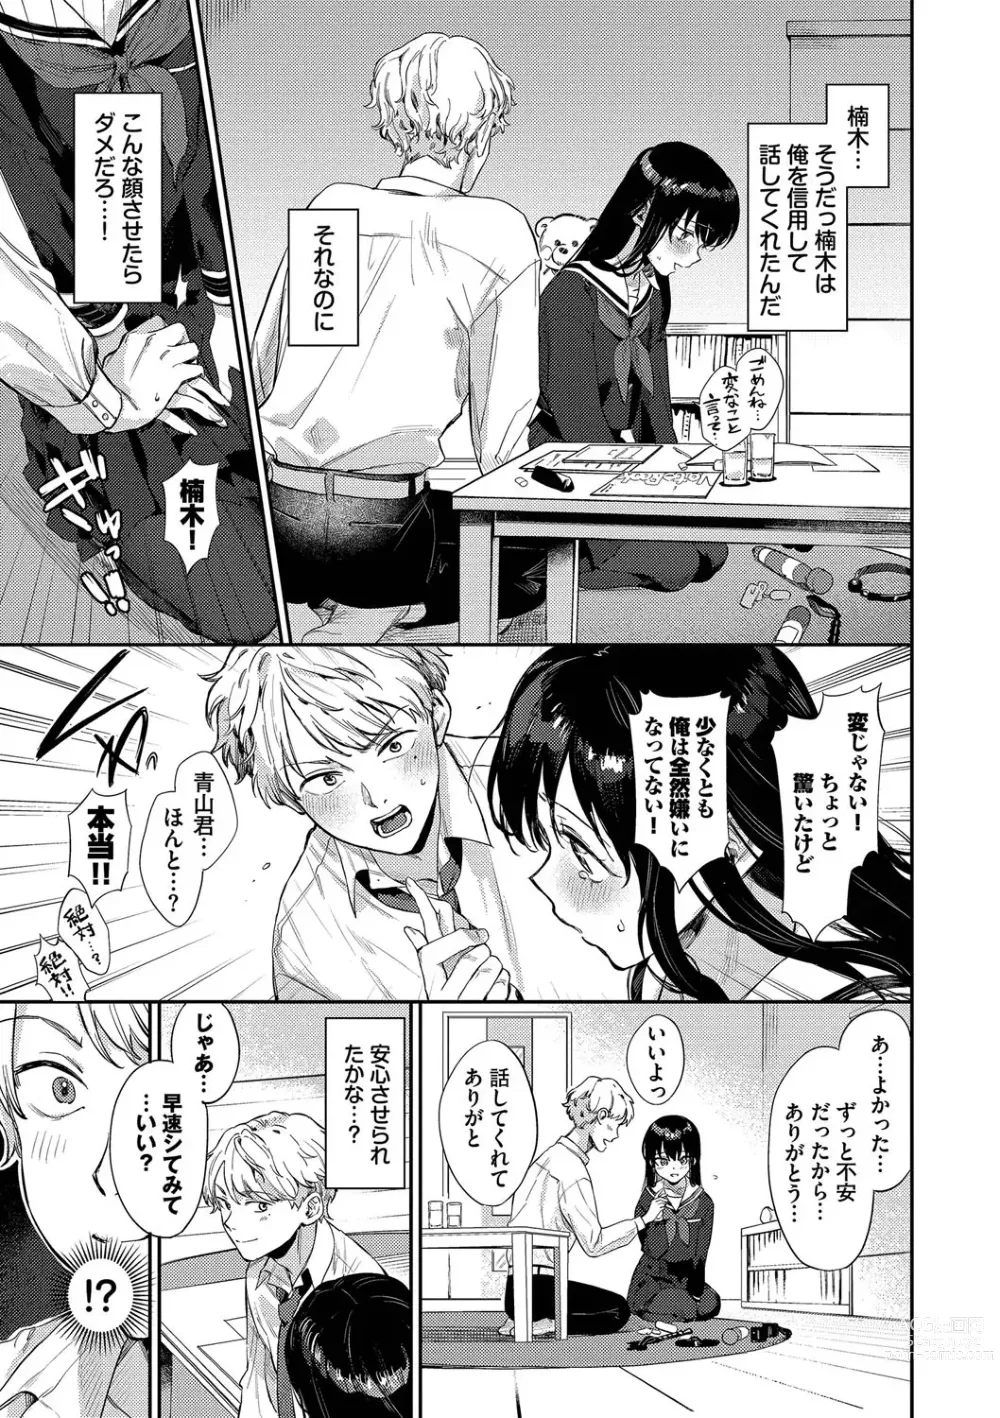 Page 8 of manga Mutsuri Bloom